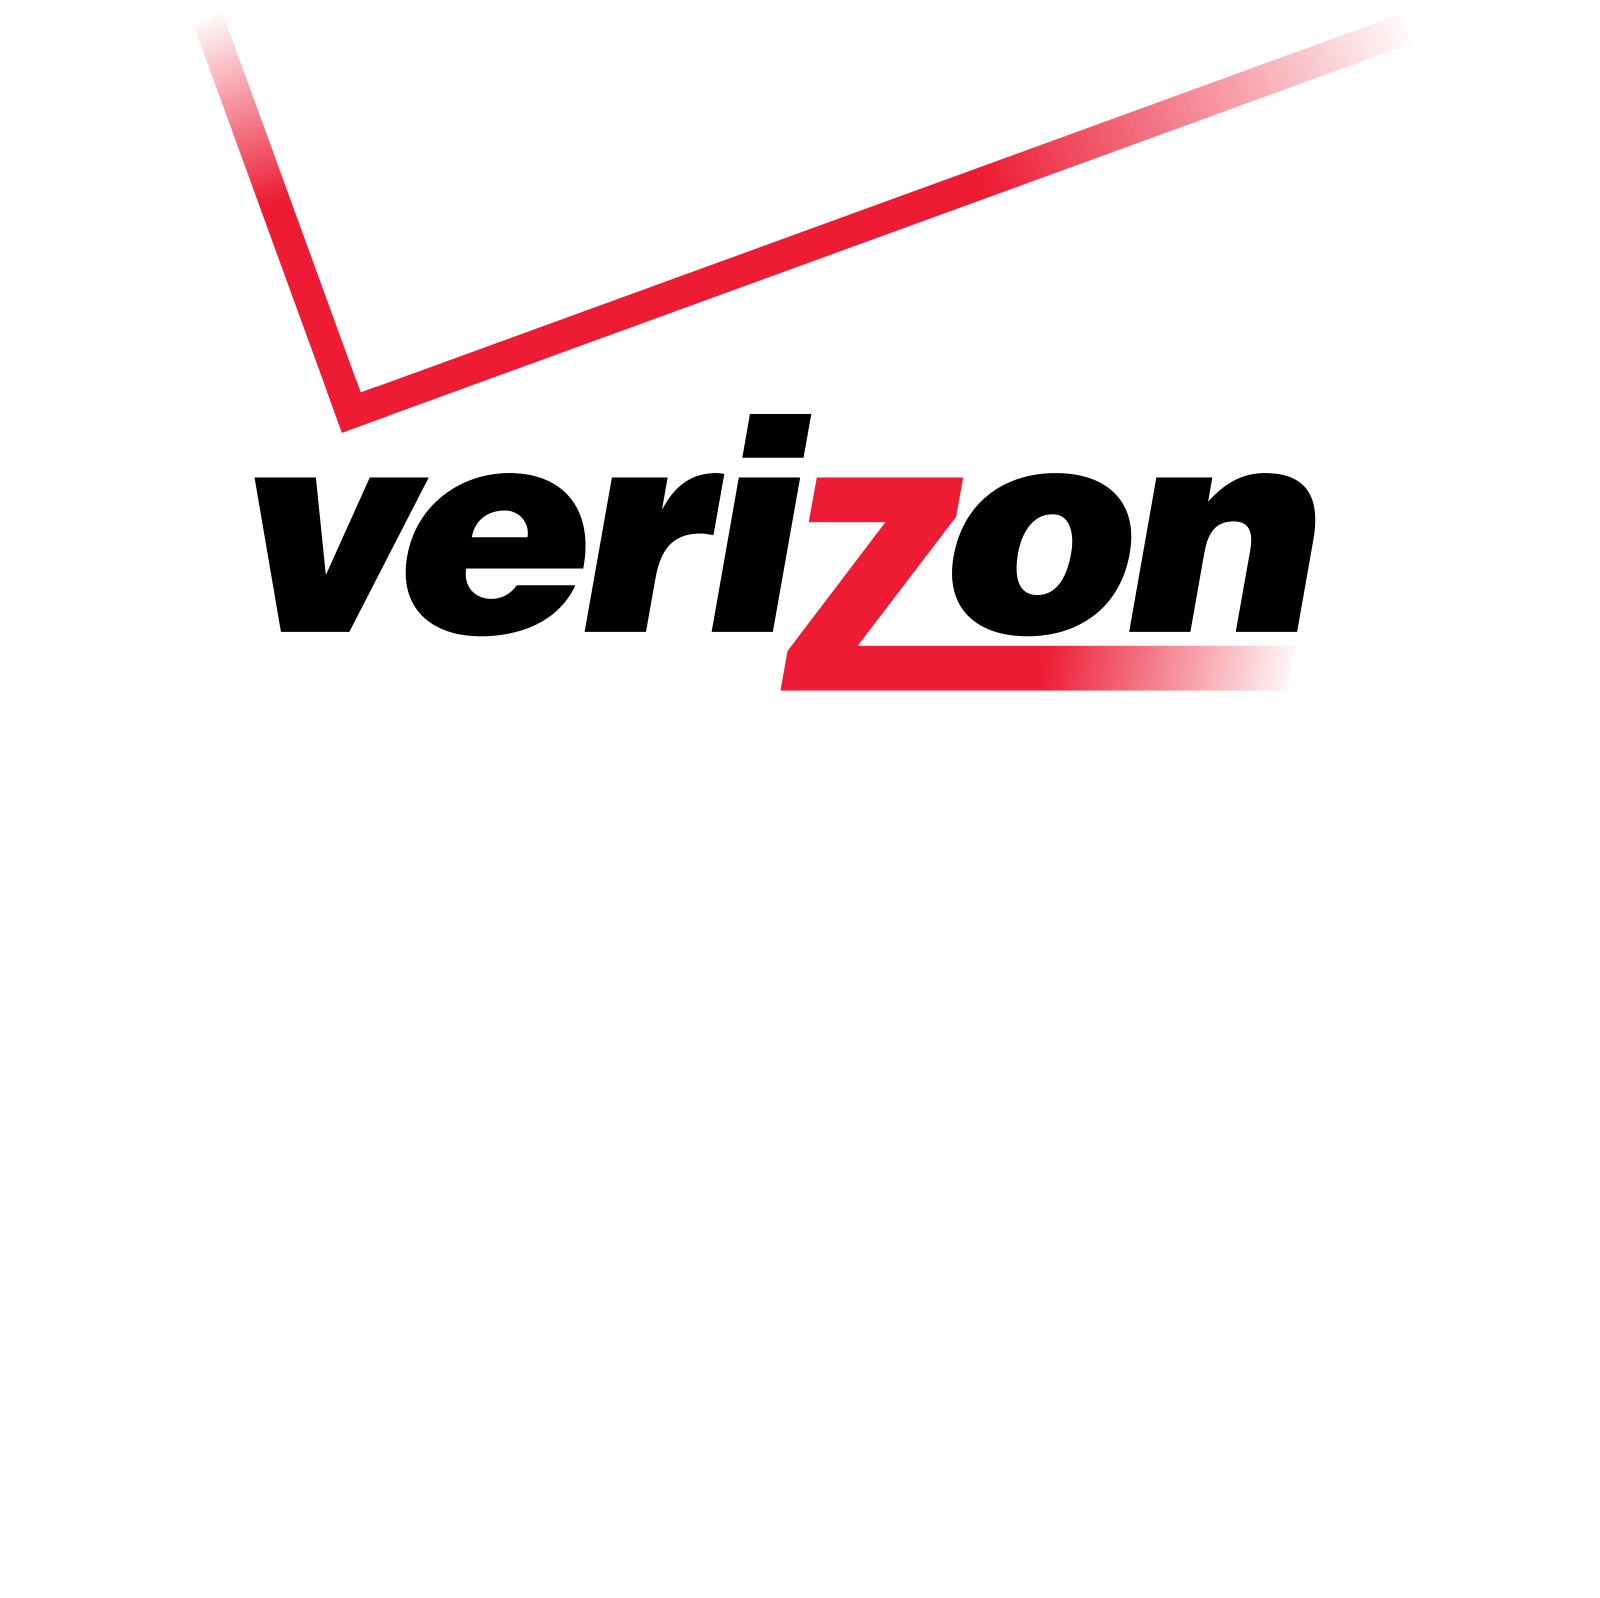 Verizon Small Logo - Verizon.S. wireless carrier